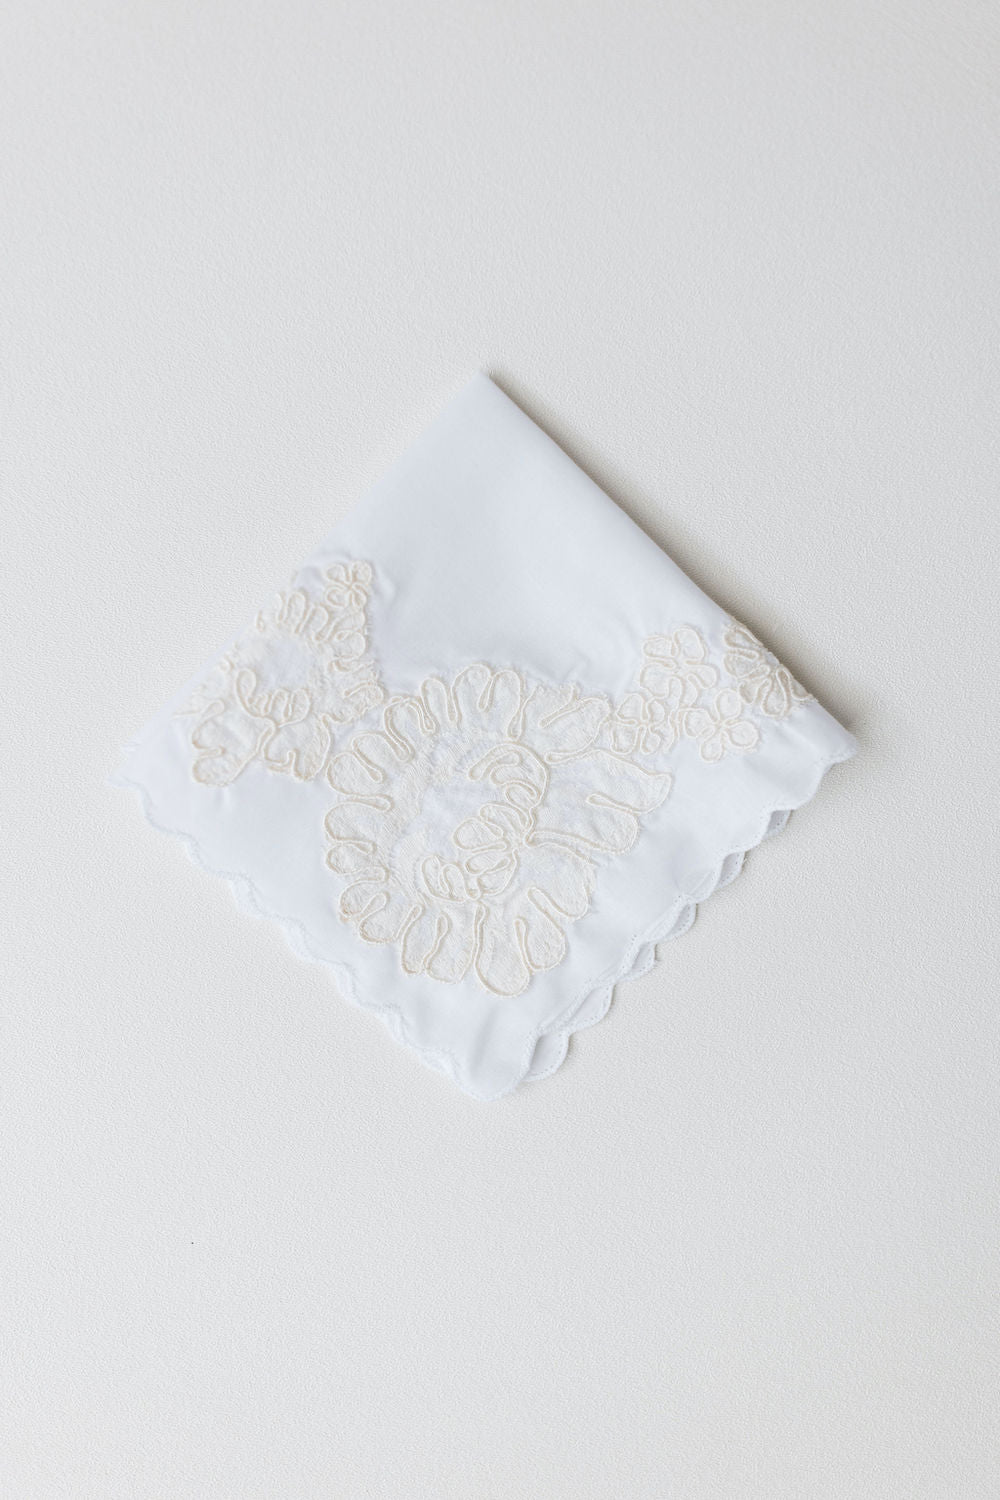 handmade wedding heirloom handkerchief from mom's wedding dress lace by The Garter Girl